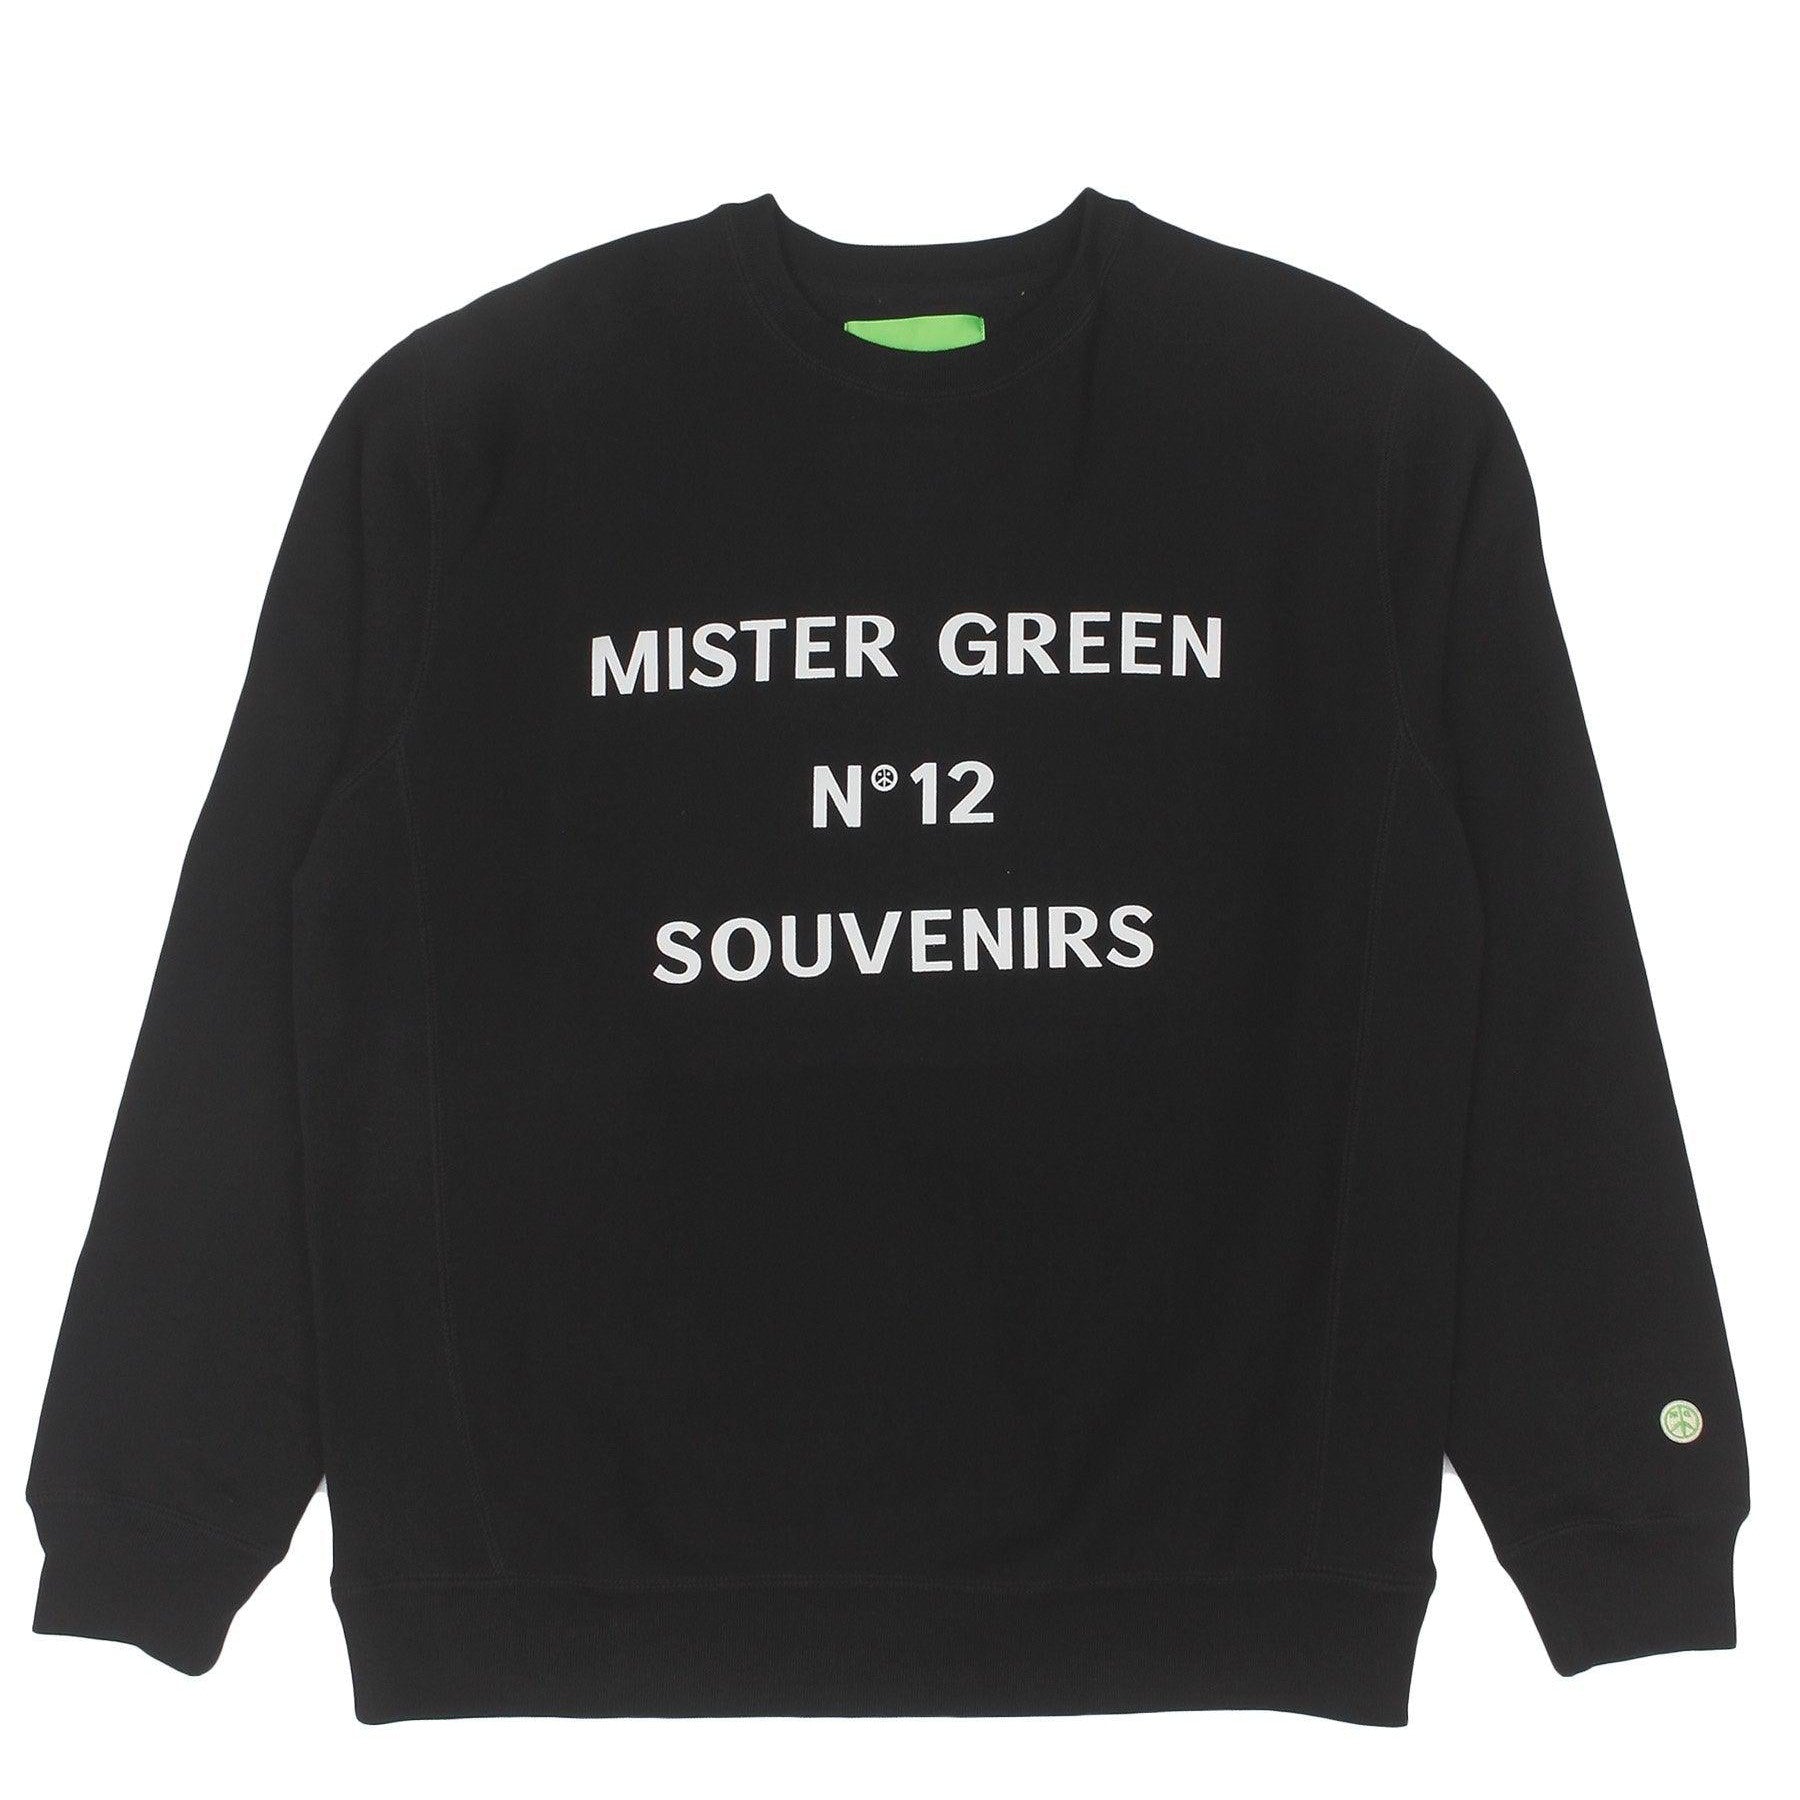 No. 12 Souvenirs Crewneck - Black-Mister Green-Mister Green